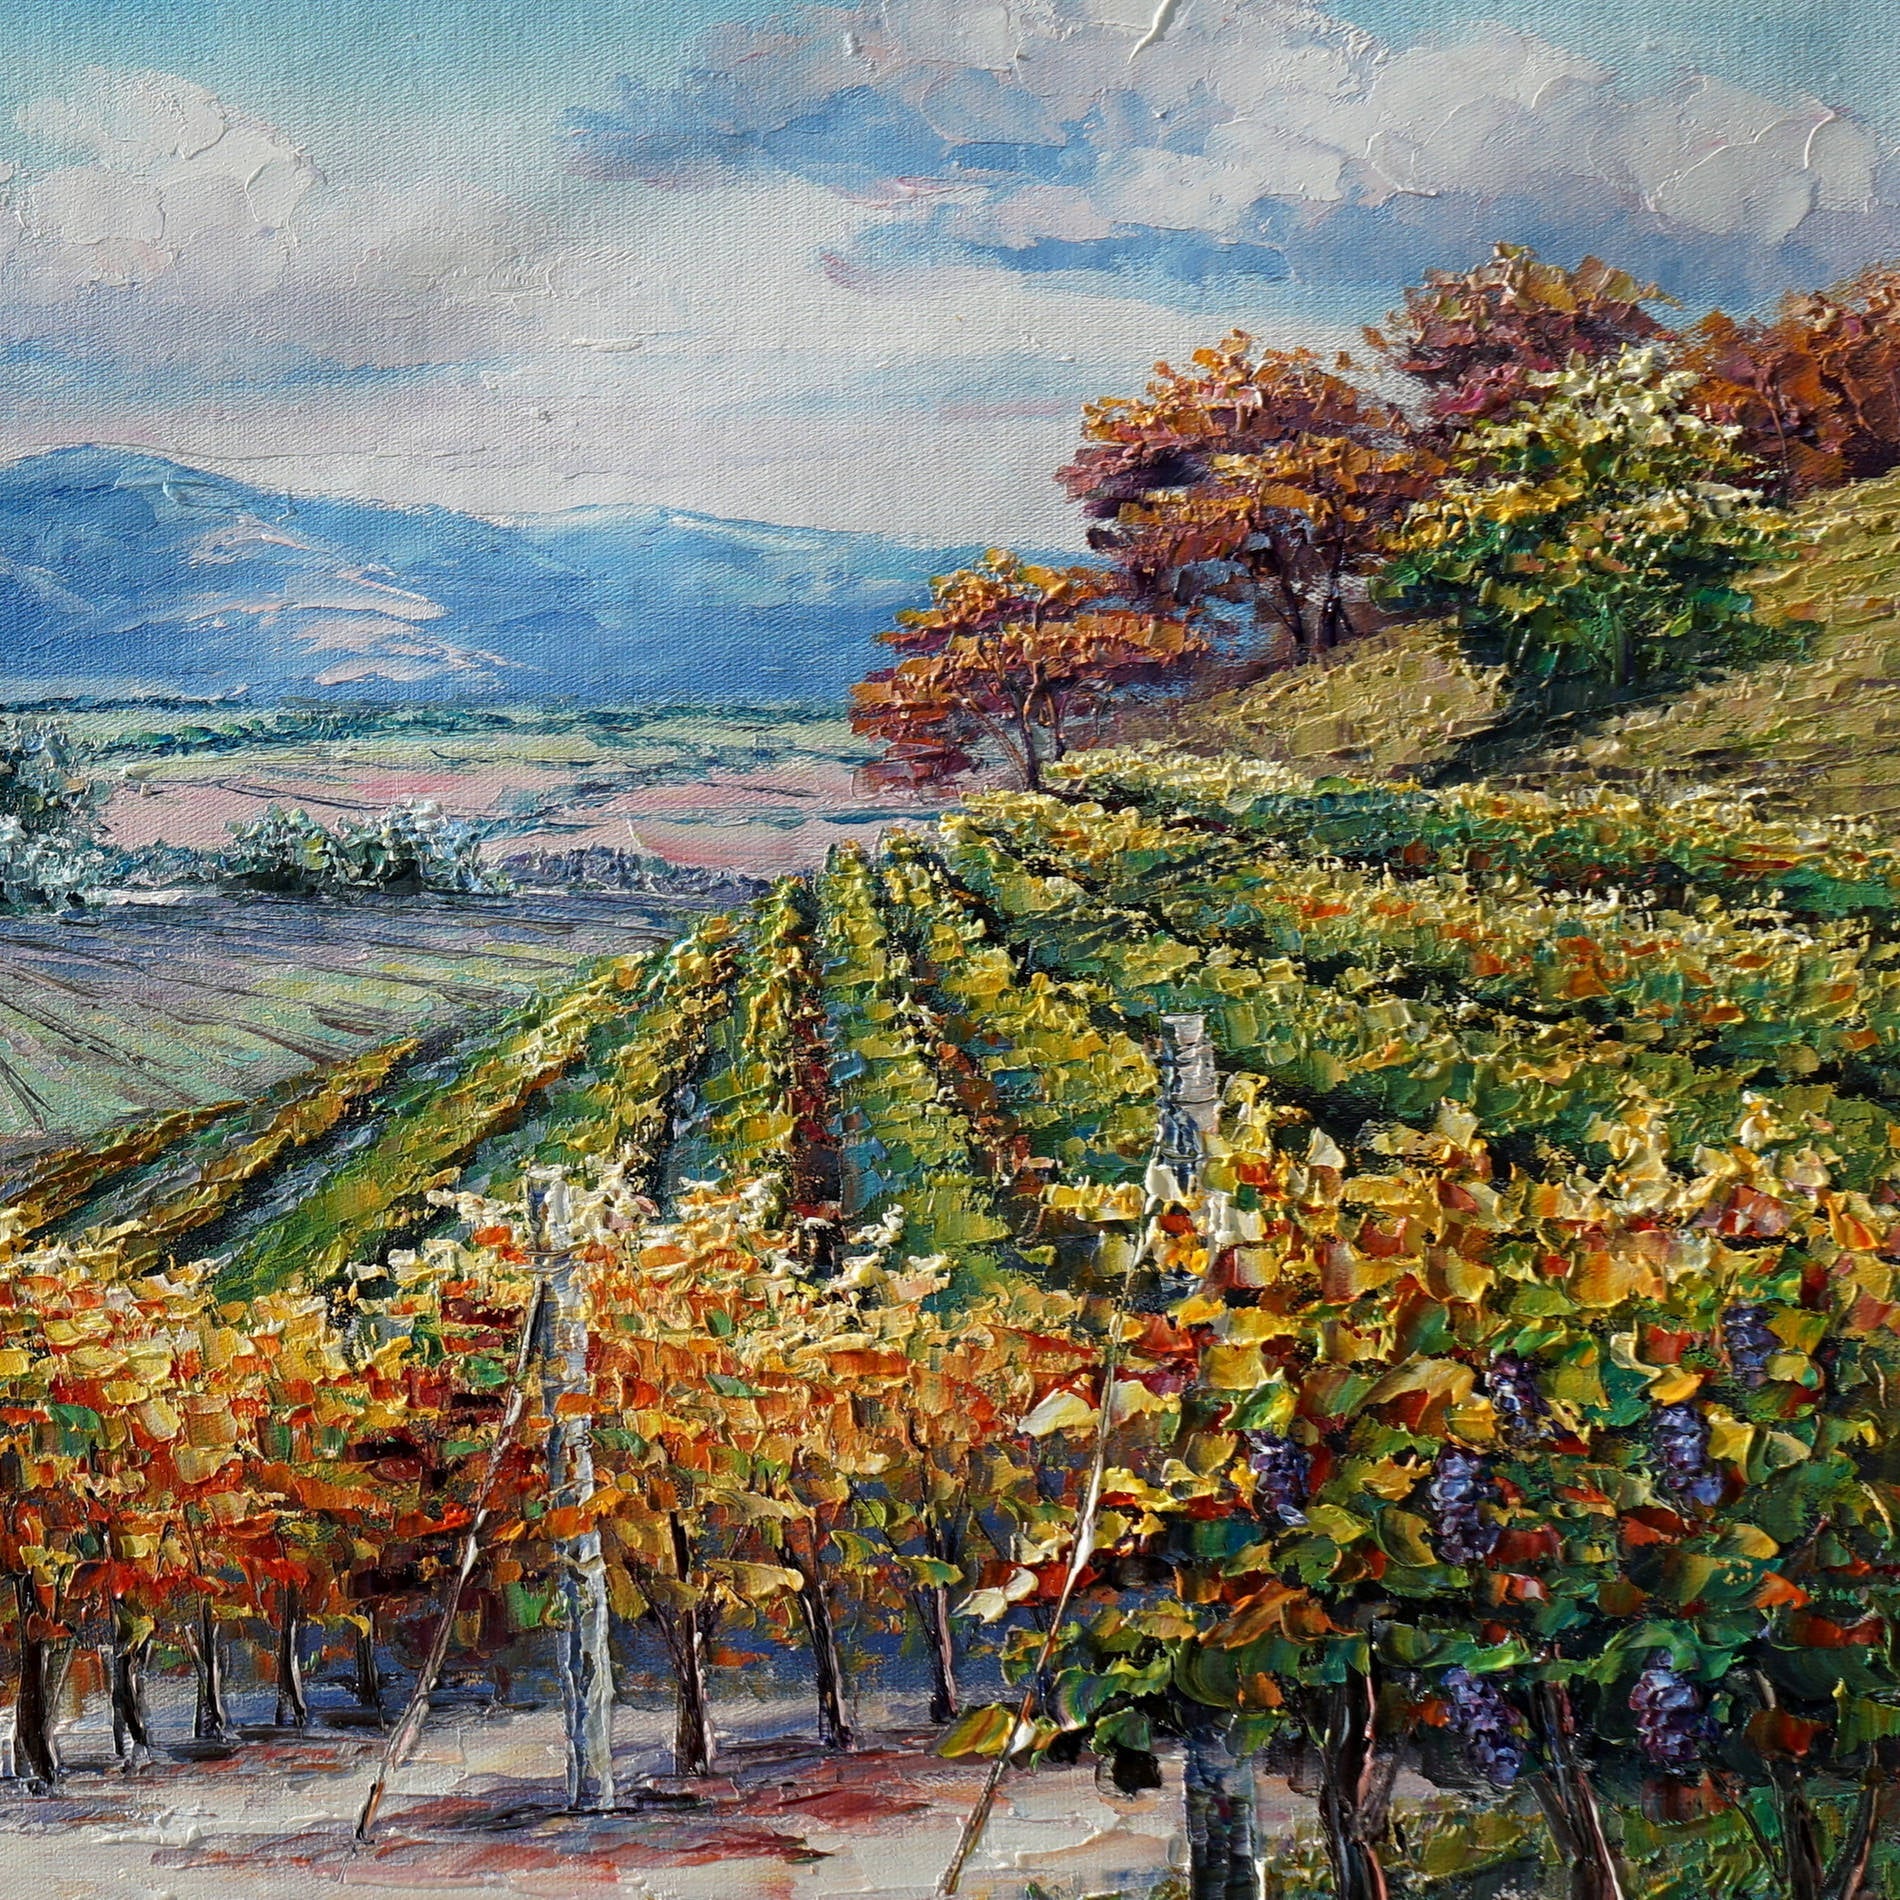 Dipinto di vigne autunnali con colline e cielo nuvoloso